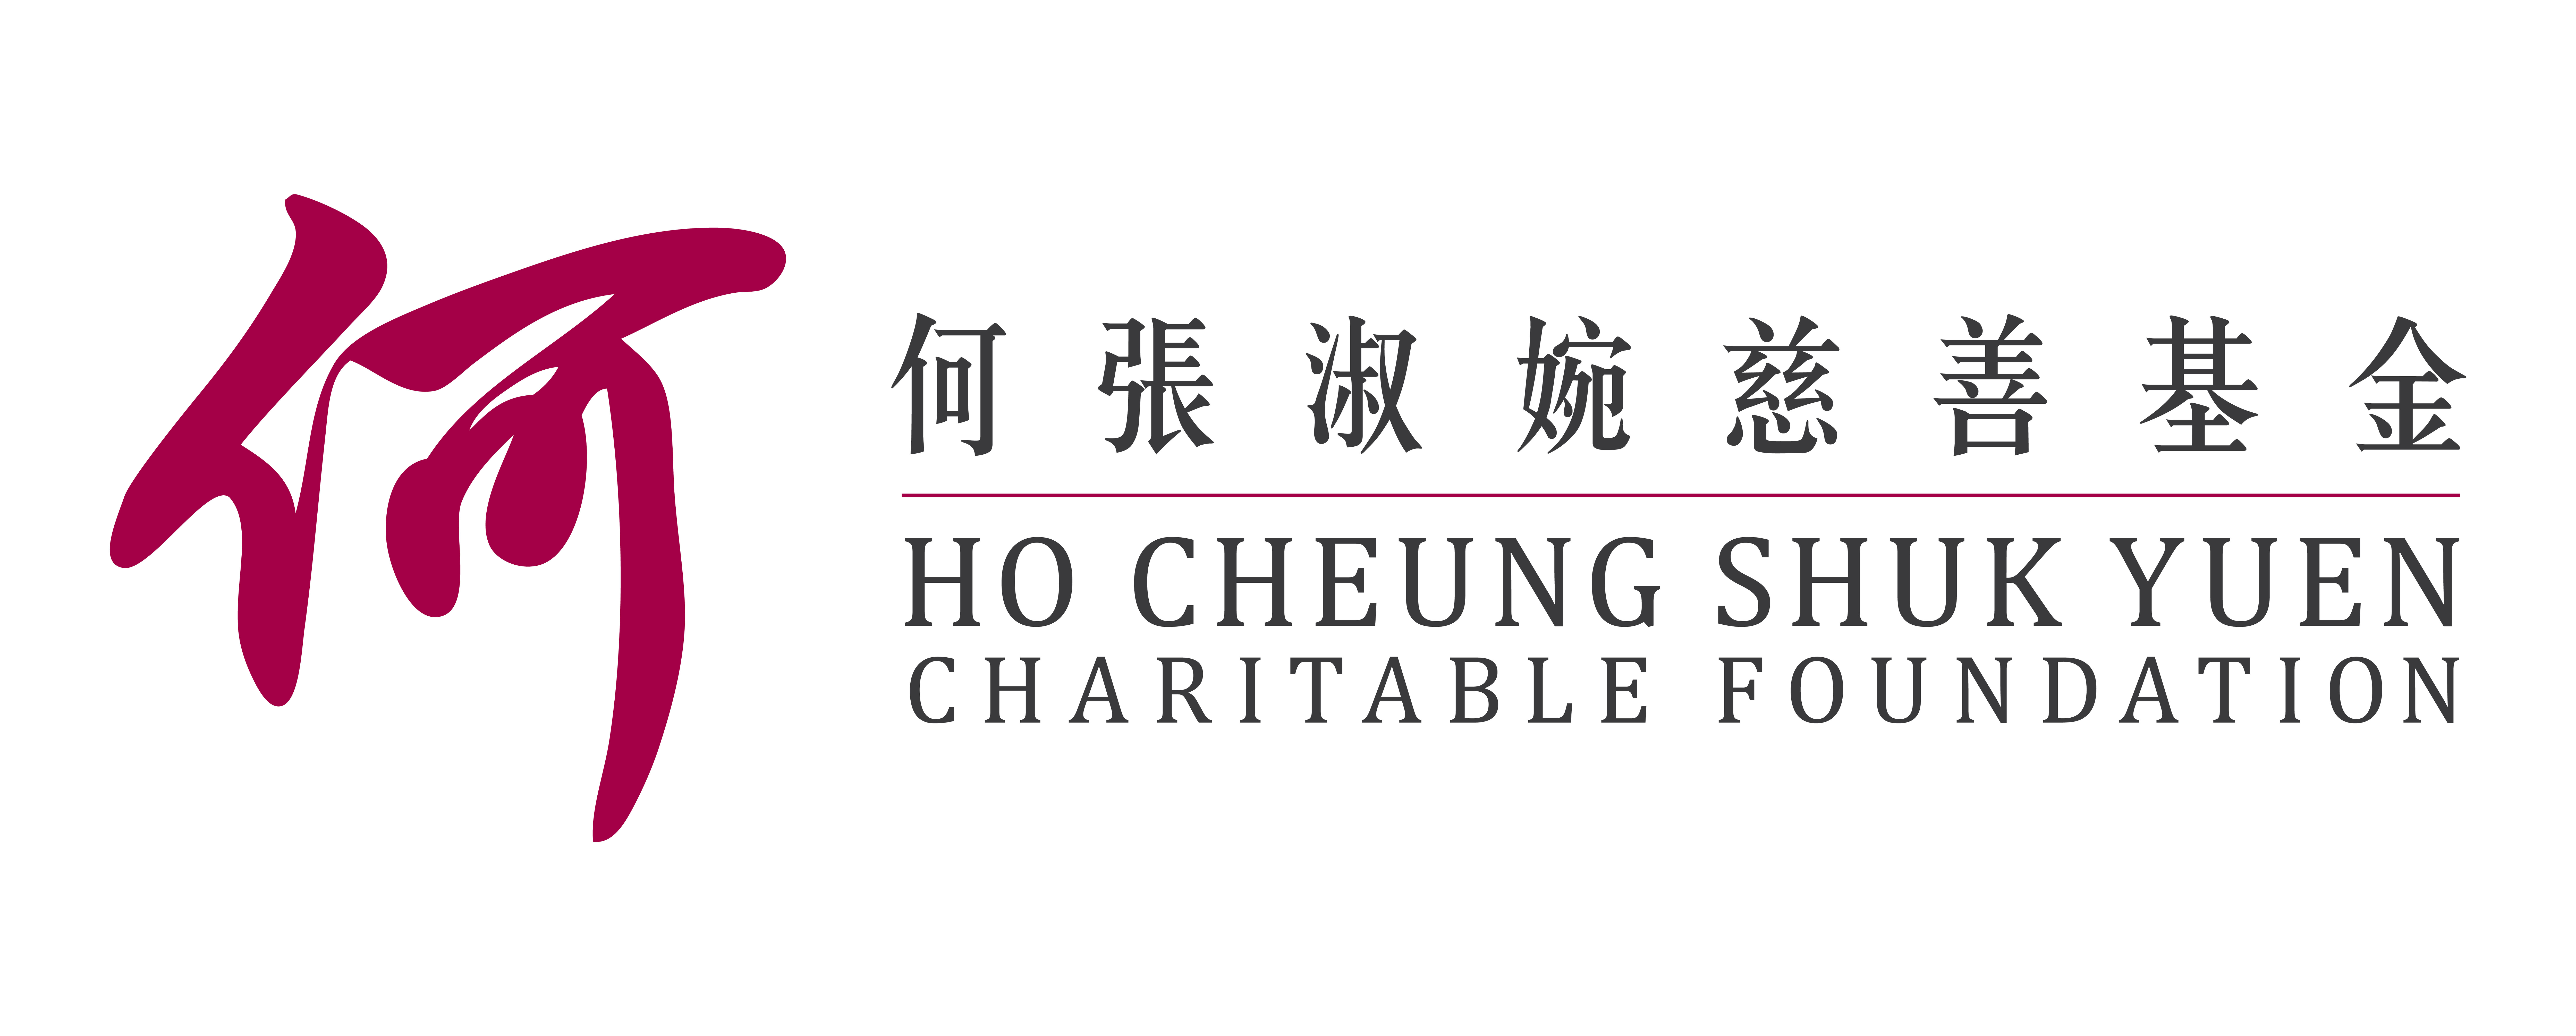 Ho Cheung Shuk Yuen Charitable Foundation